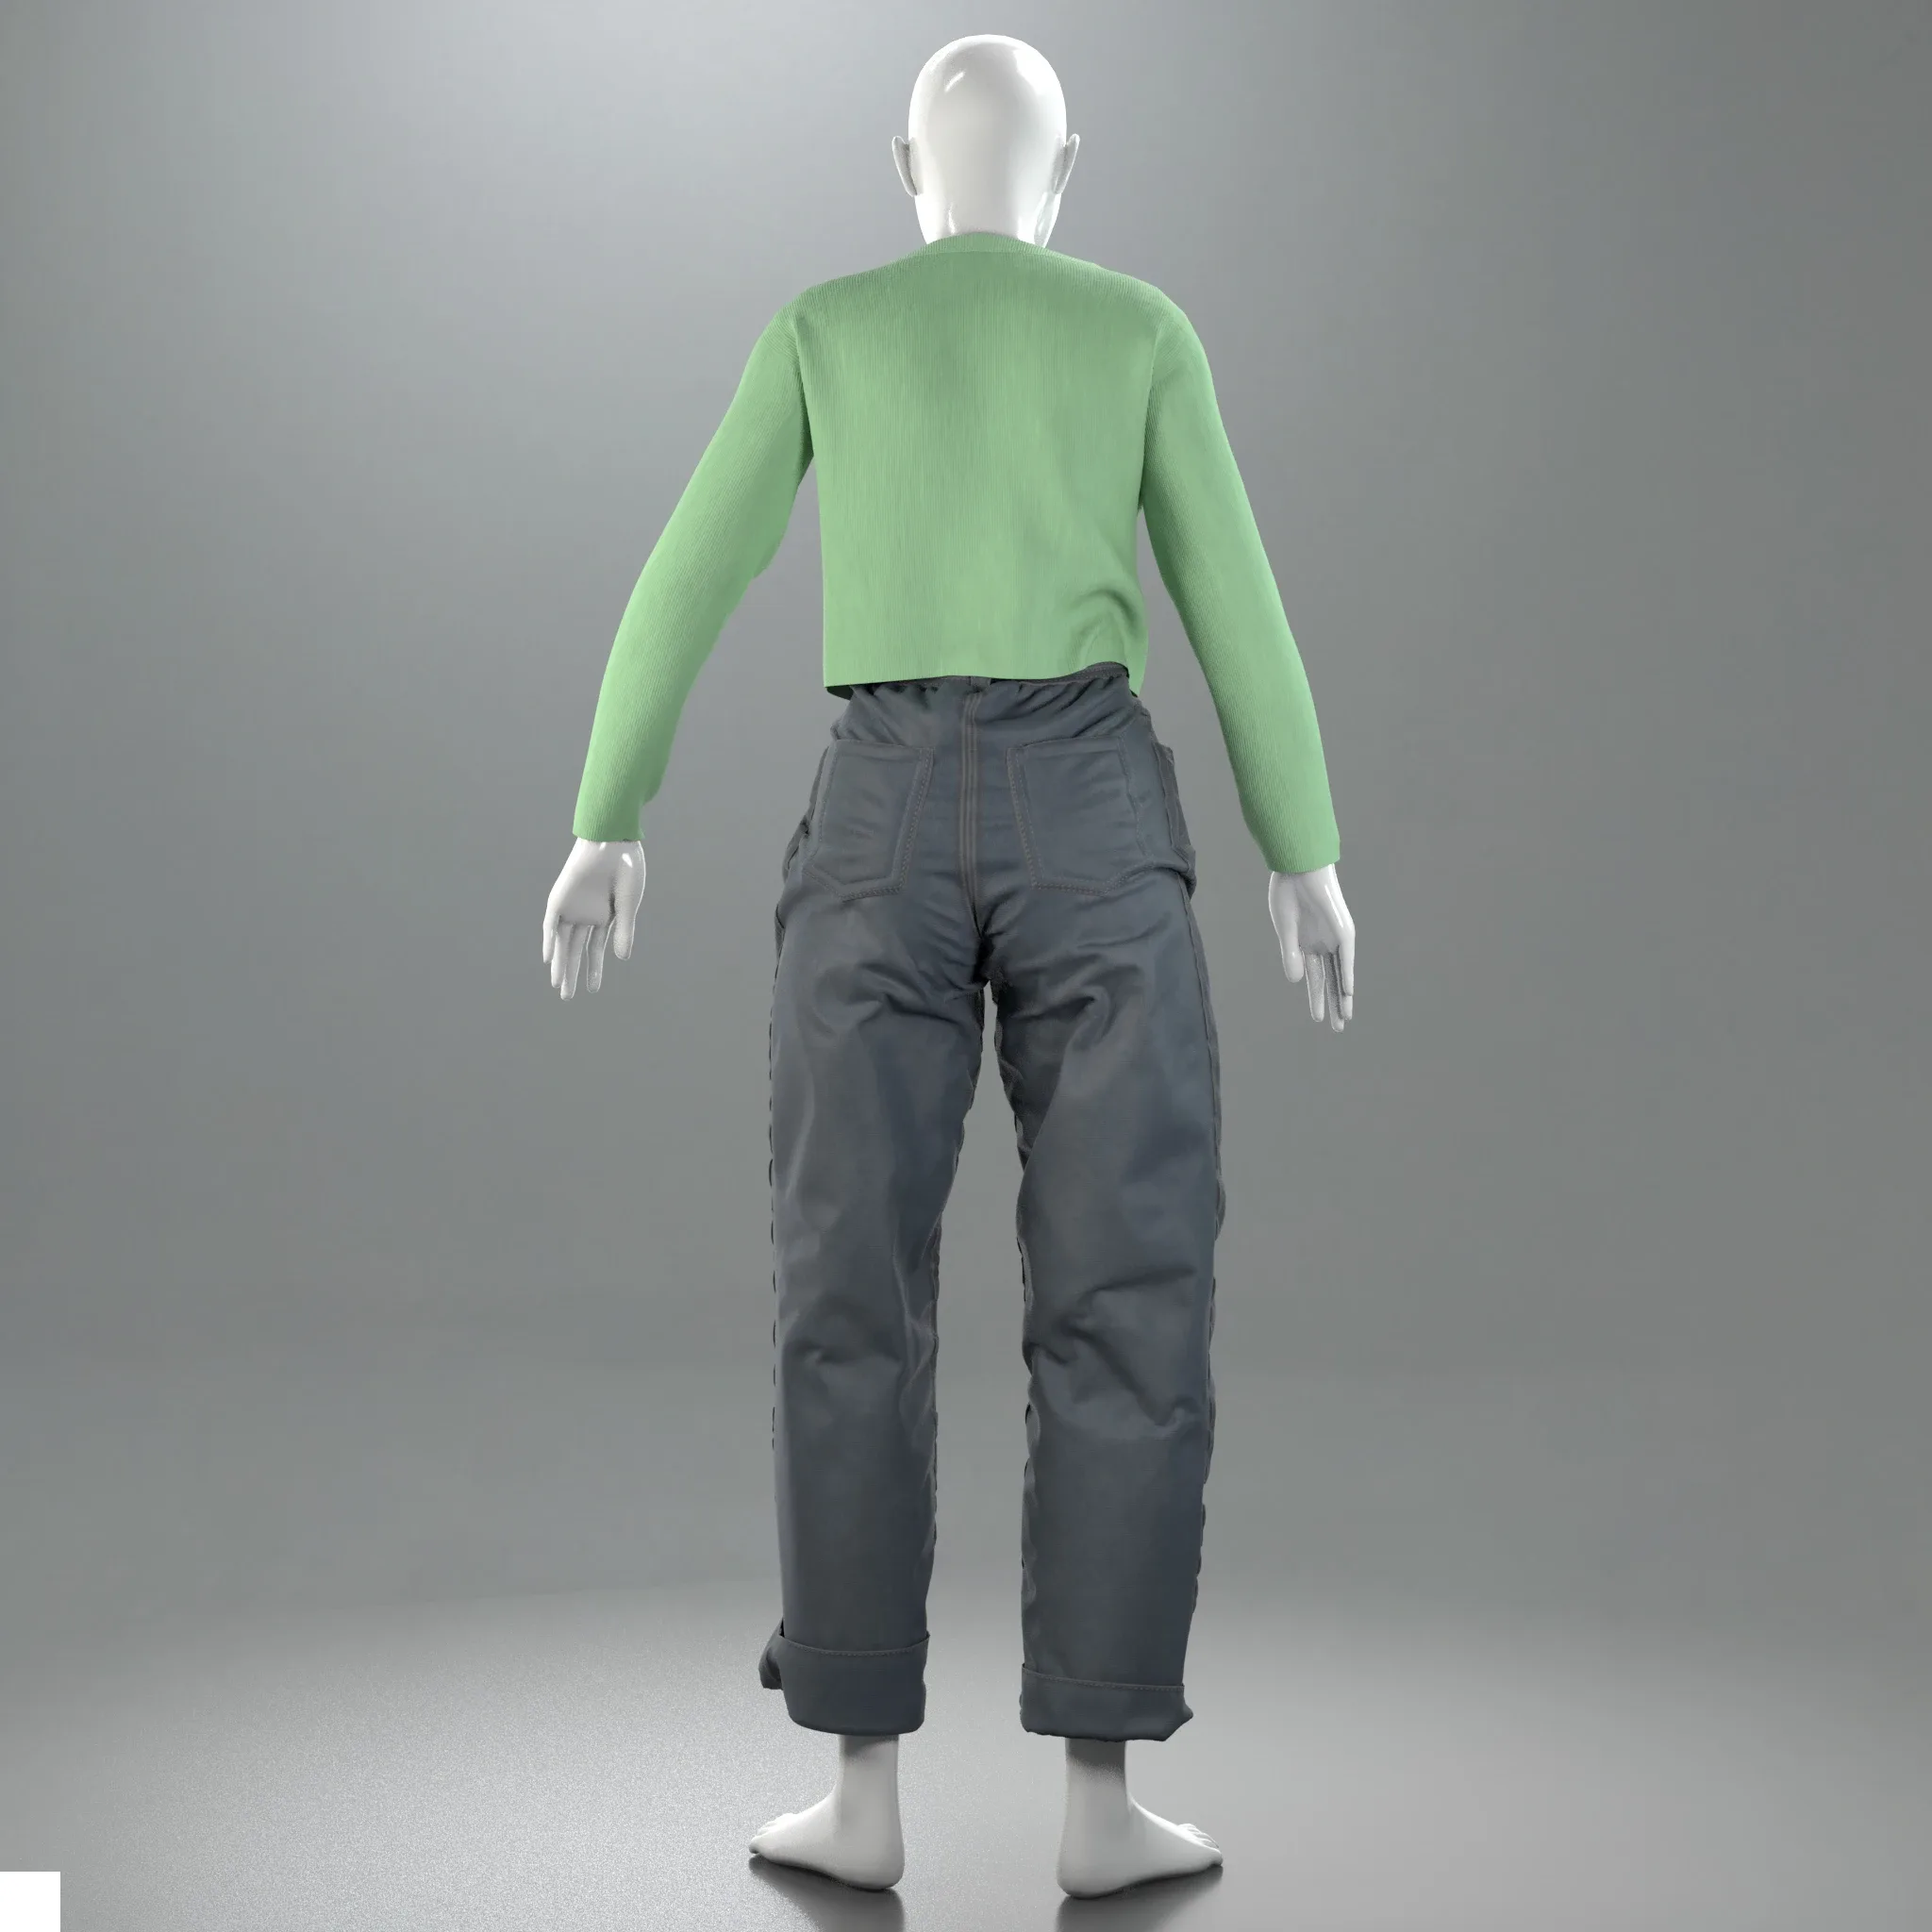 Cropped Cardigan & Oversized Jeans (Marvelous Designer & Clo3d & FBX & OBJ & Texture)